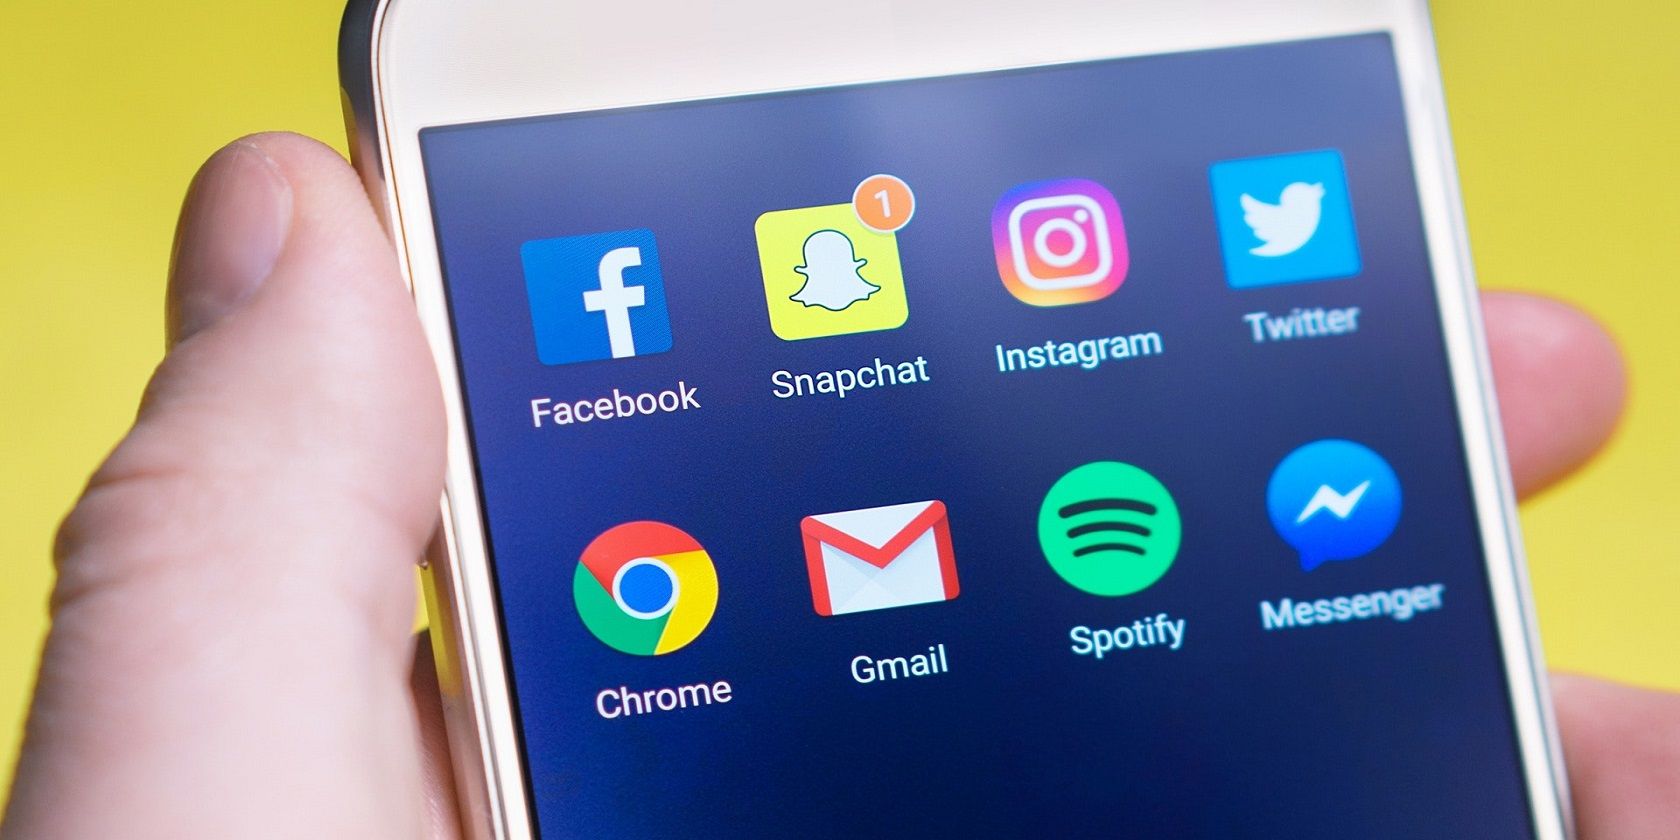 social media logos on phone screen